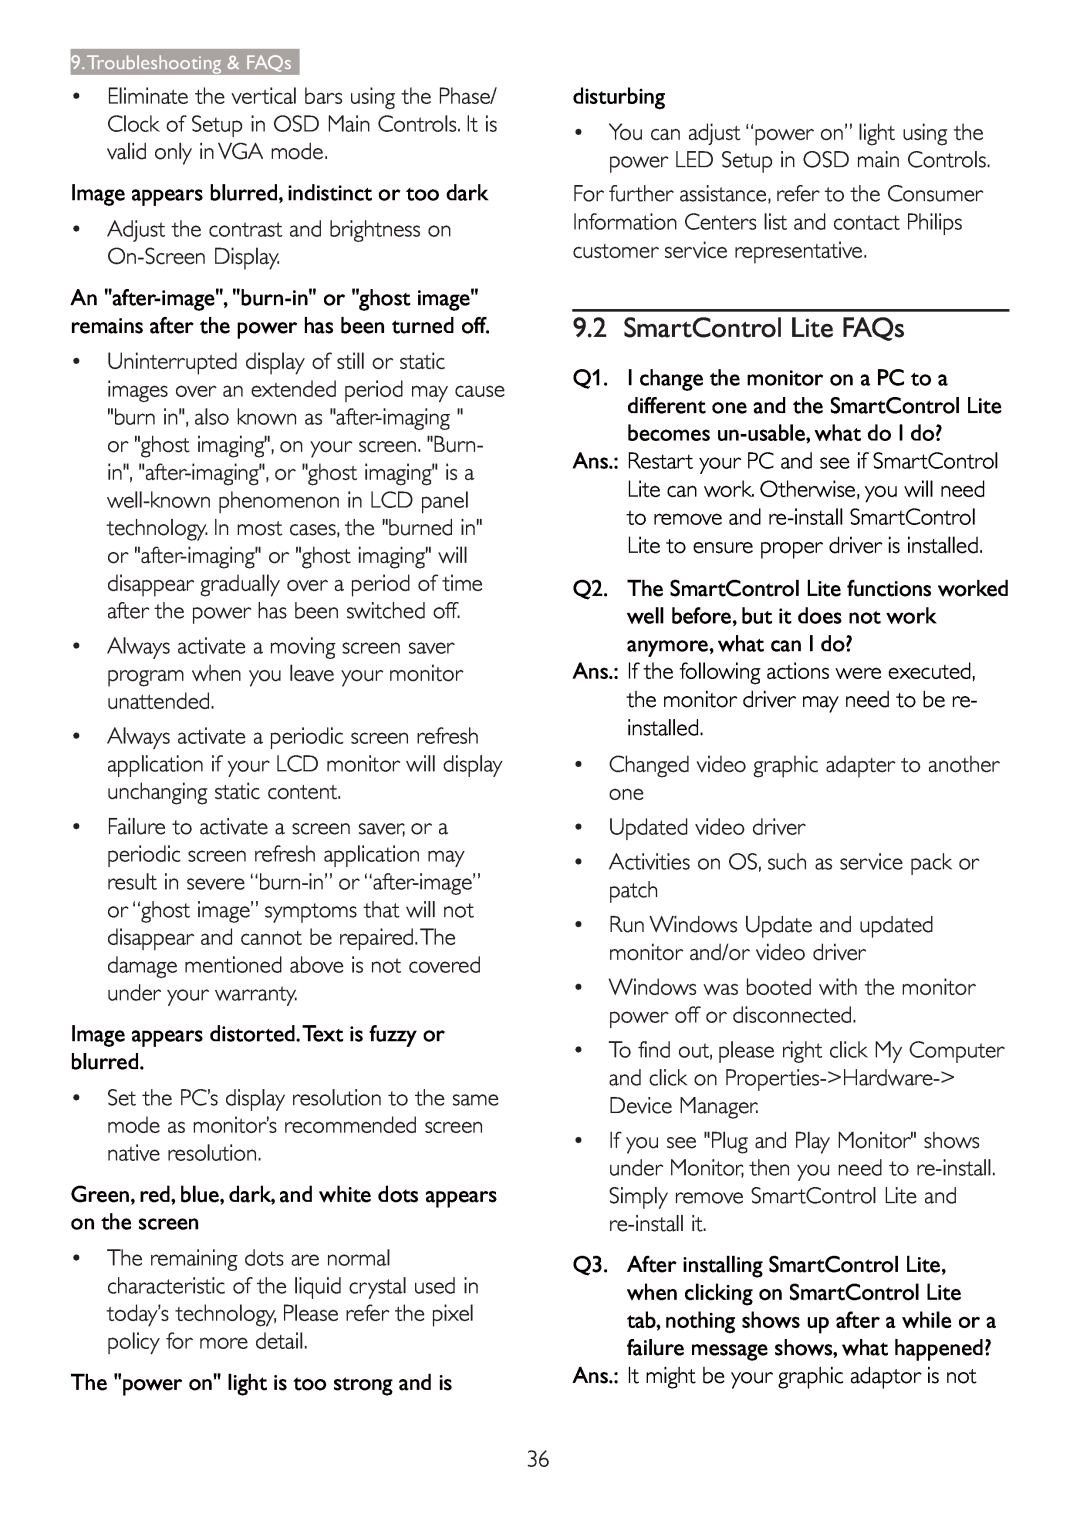 Philips 2.47E+06 user manual SmartControl Lite FAQs, Image appears blurred, indistinct or too dark, disturbing 